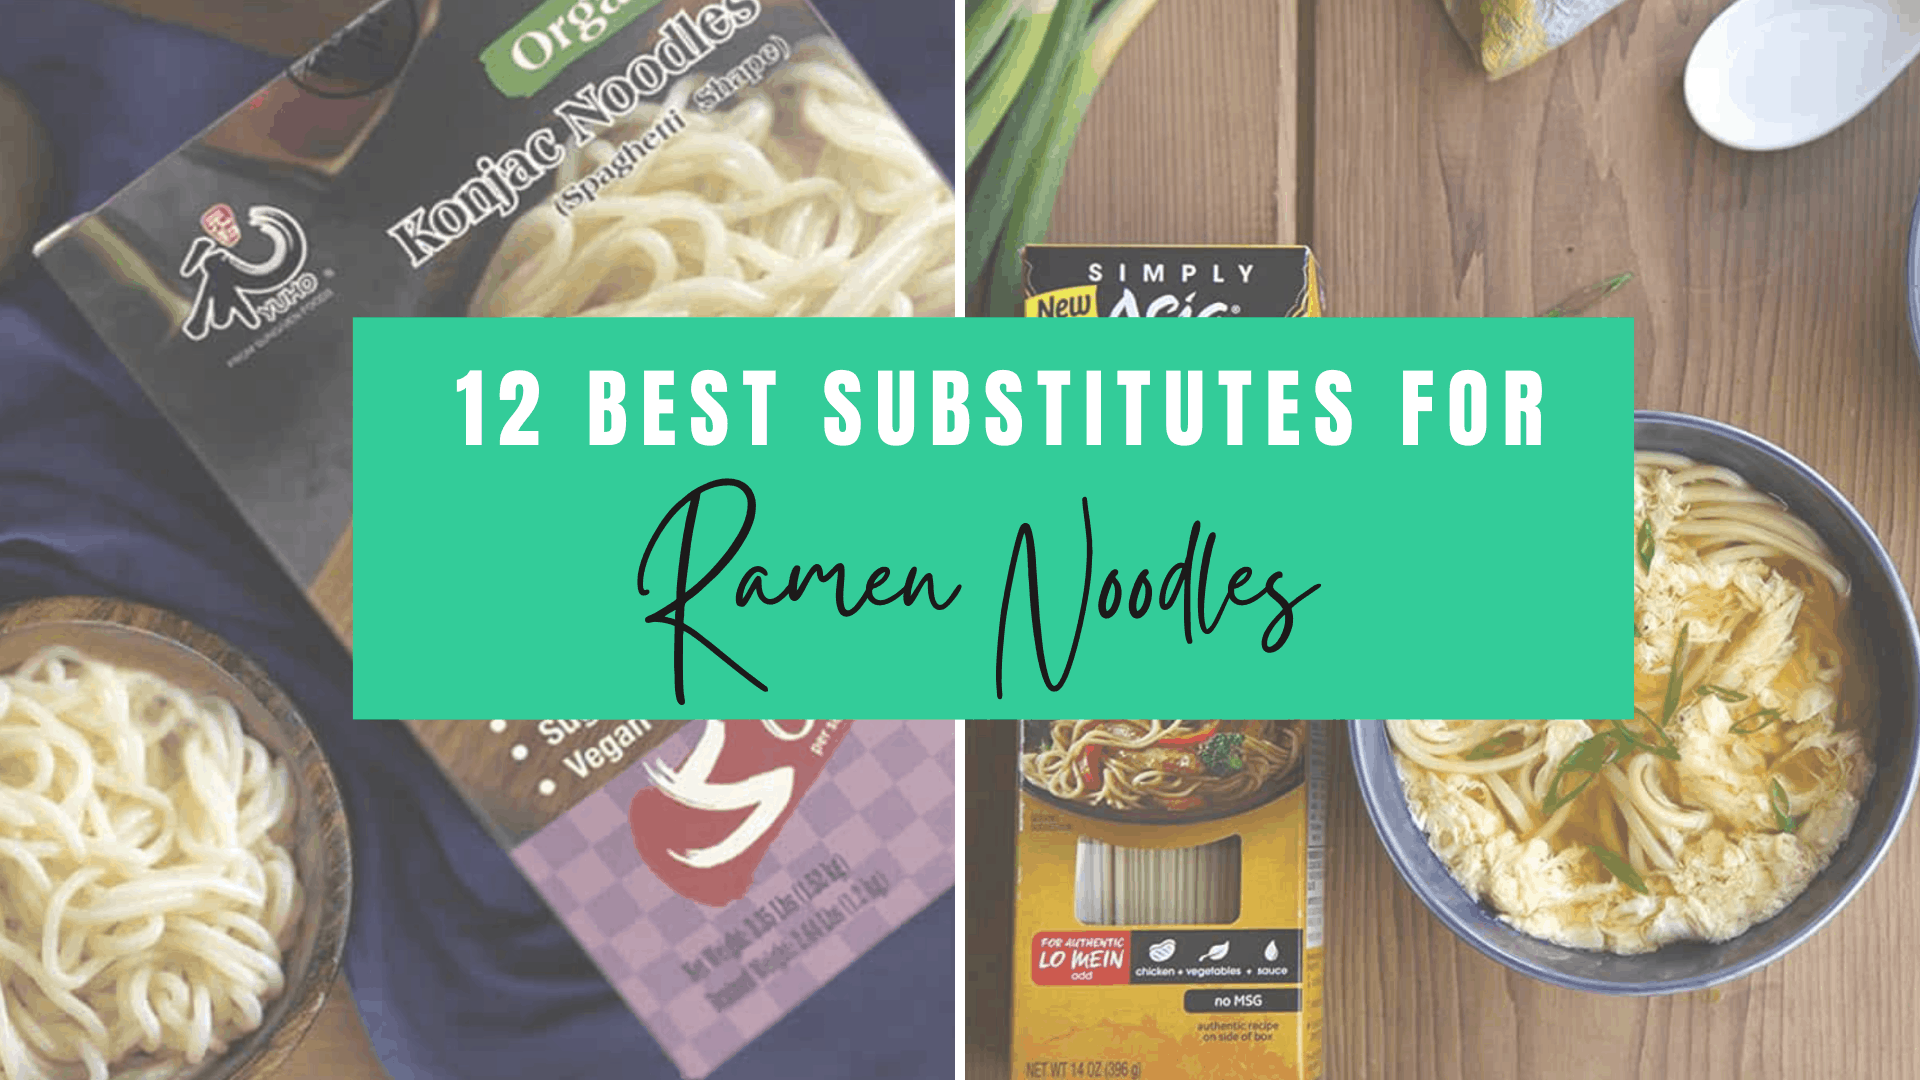 12 best substitutes for ramen noodles | healthier, vegan and gluten-free options